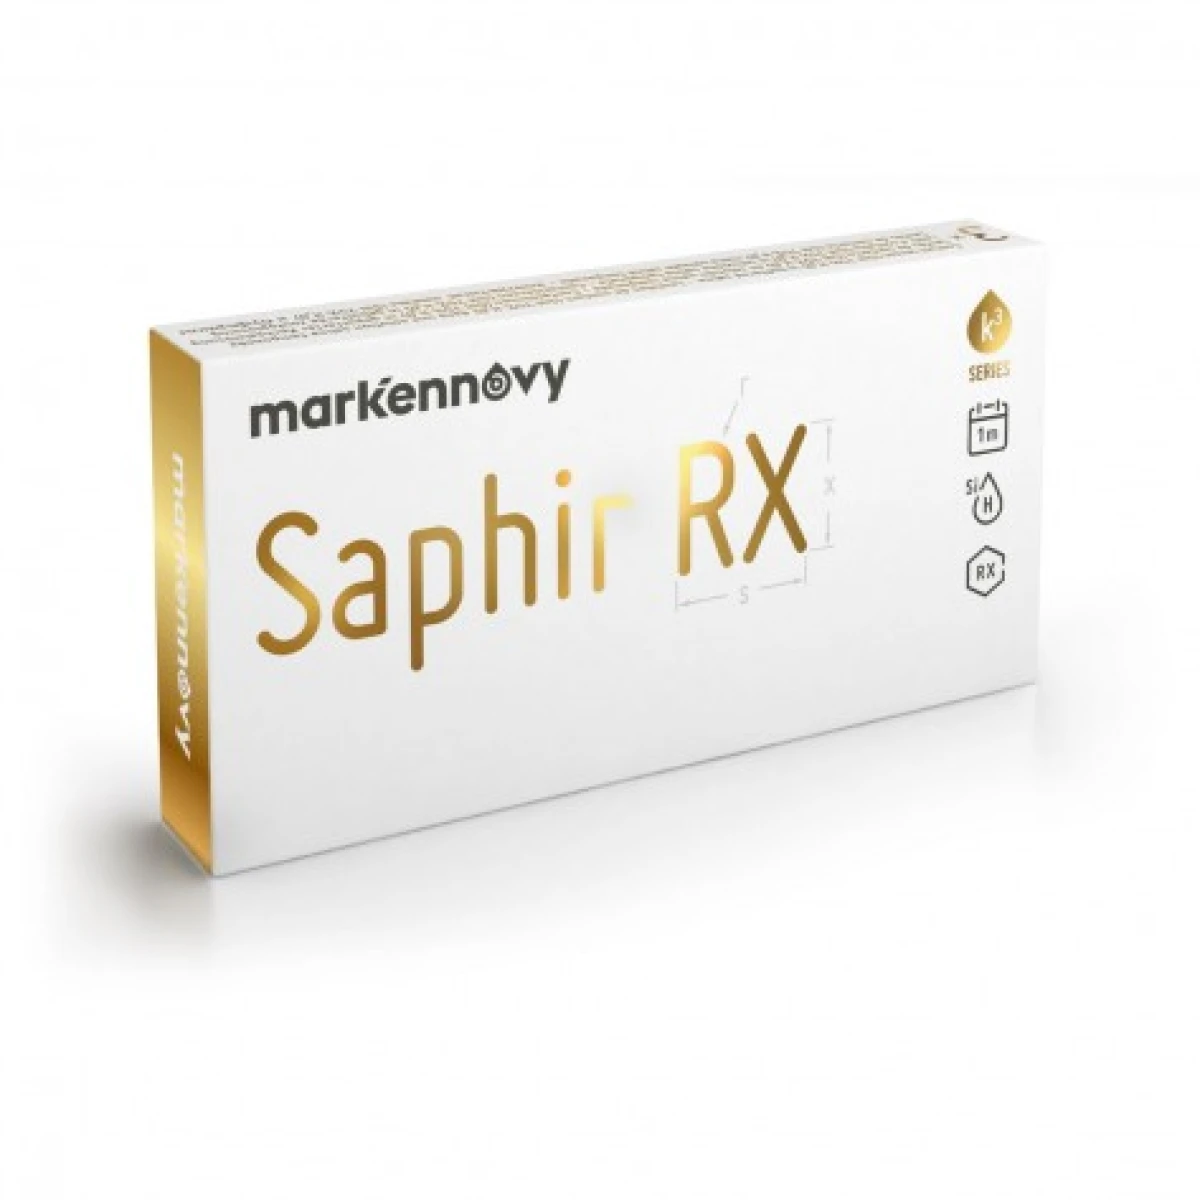 Mark'ennovy Saphir RX Multifocal Spheric Μηνιαίοι φακοί επαφής 3pack